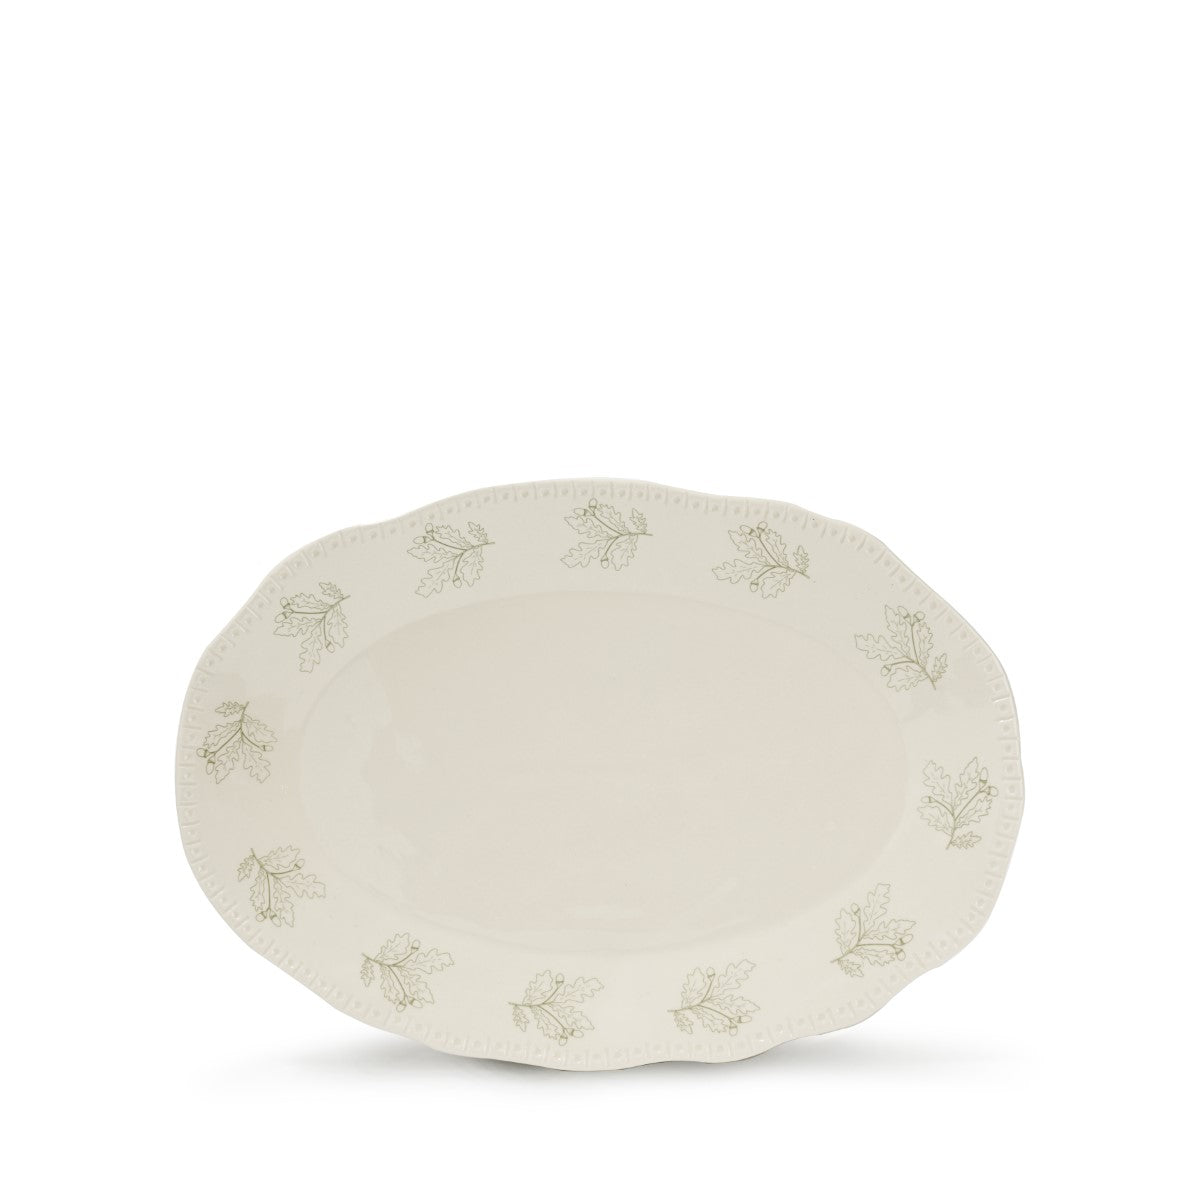 Acorn & Oak Leaves Stoneware Serving Platter